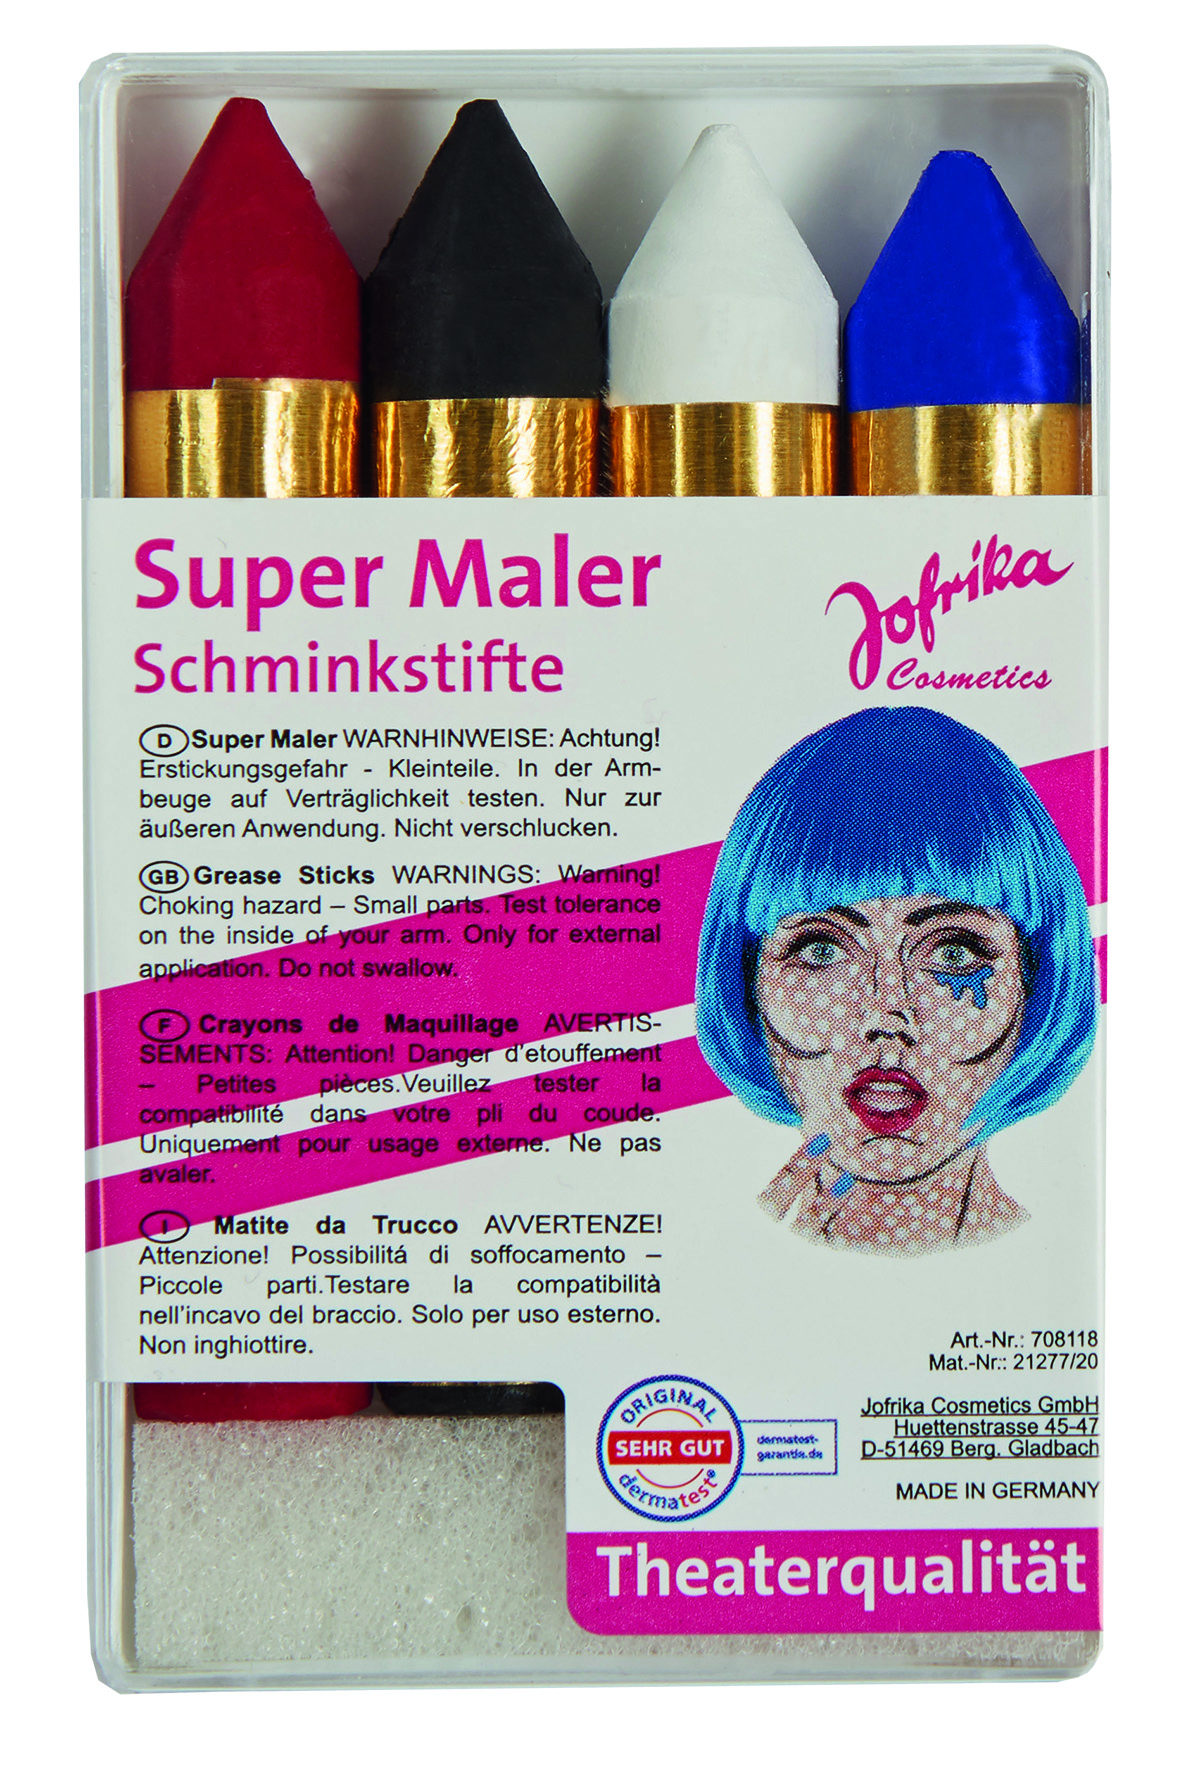 Jofrika Cosmetics 708118 - Super Maler, 4 Schminkstifte, Theaterqualität Set